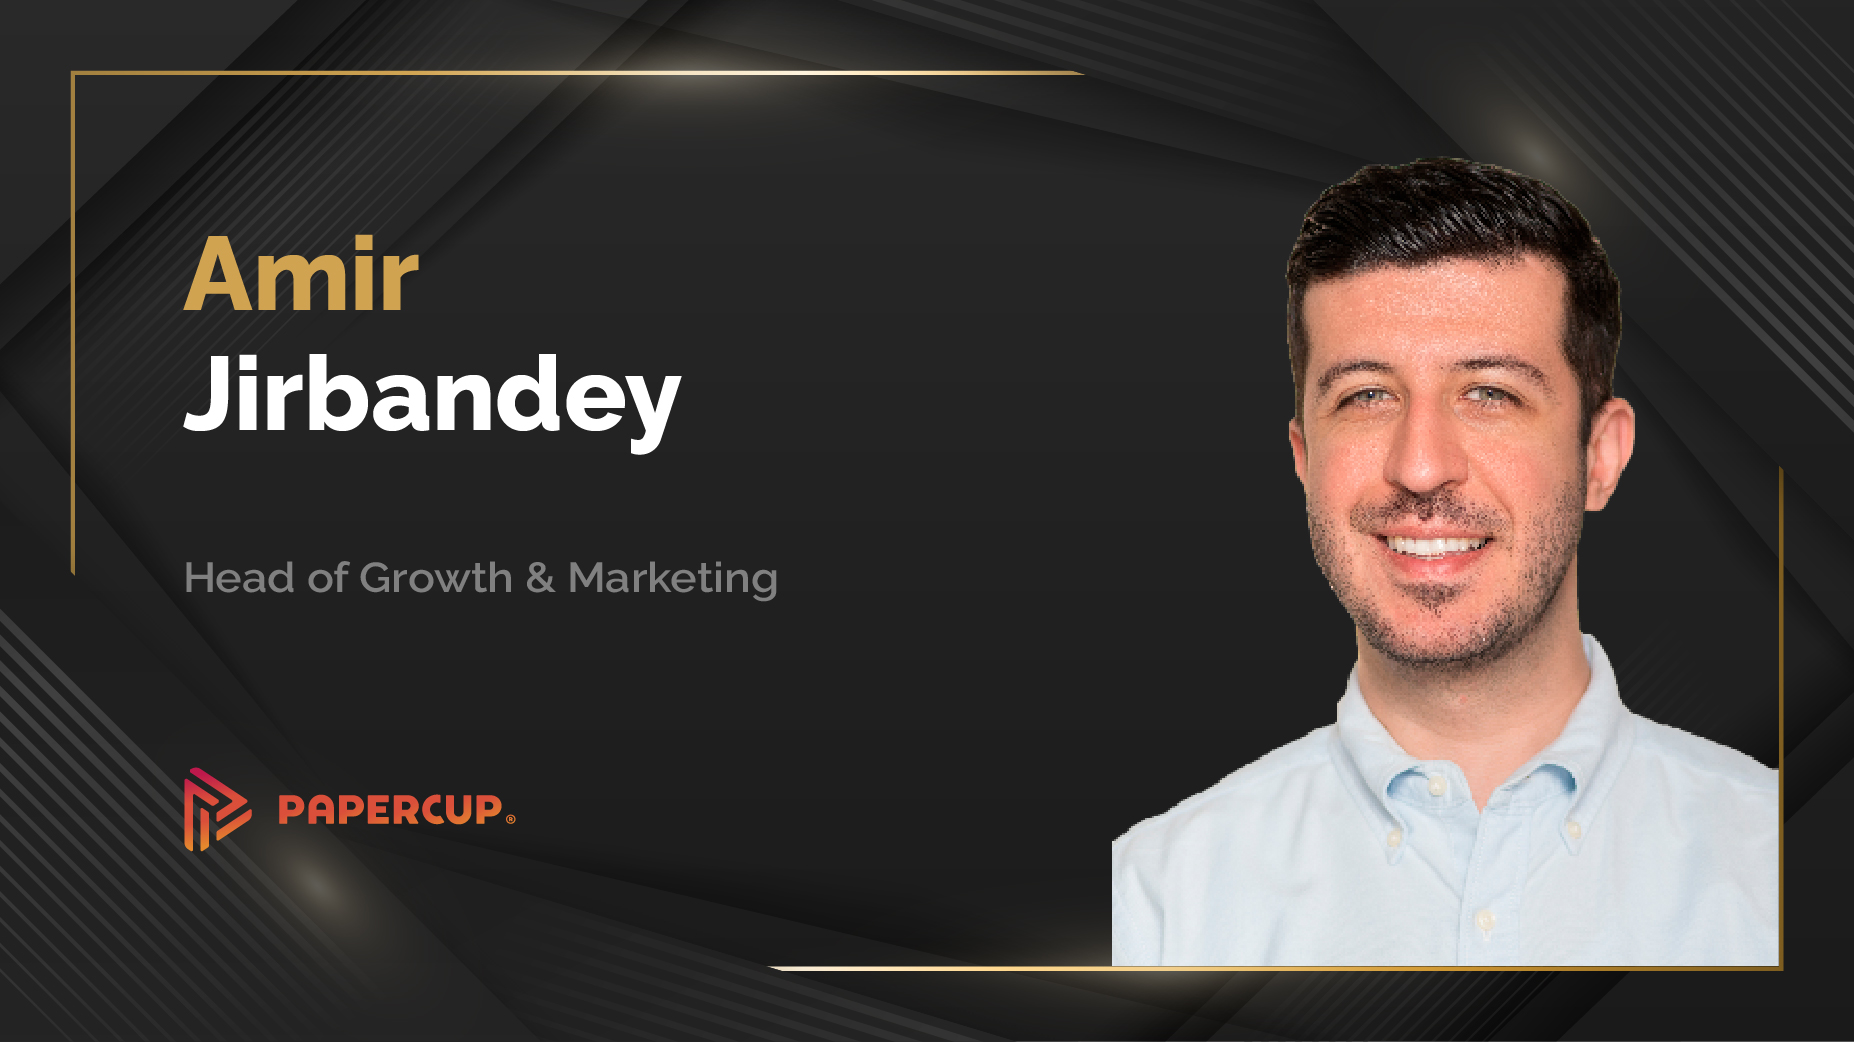 Amir-Jirbandey-Head-of-Growth-Marketing-at-Papercup